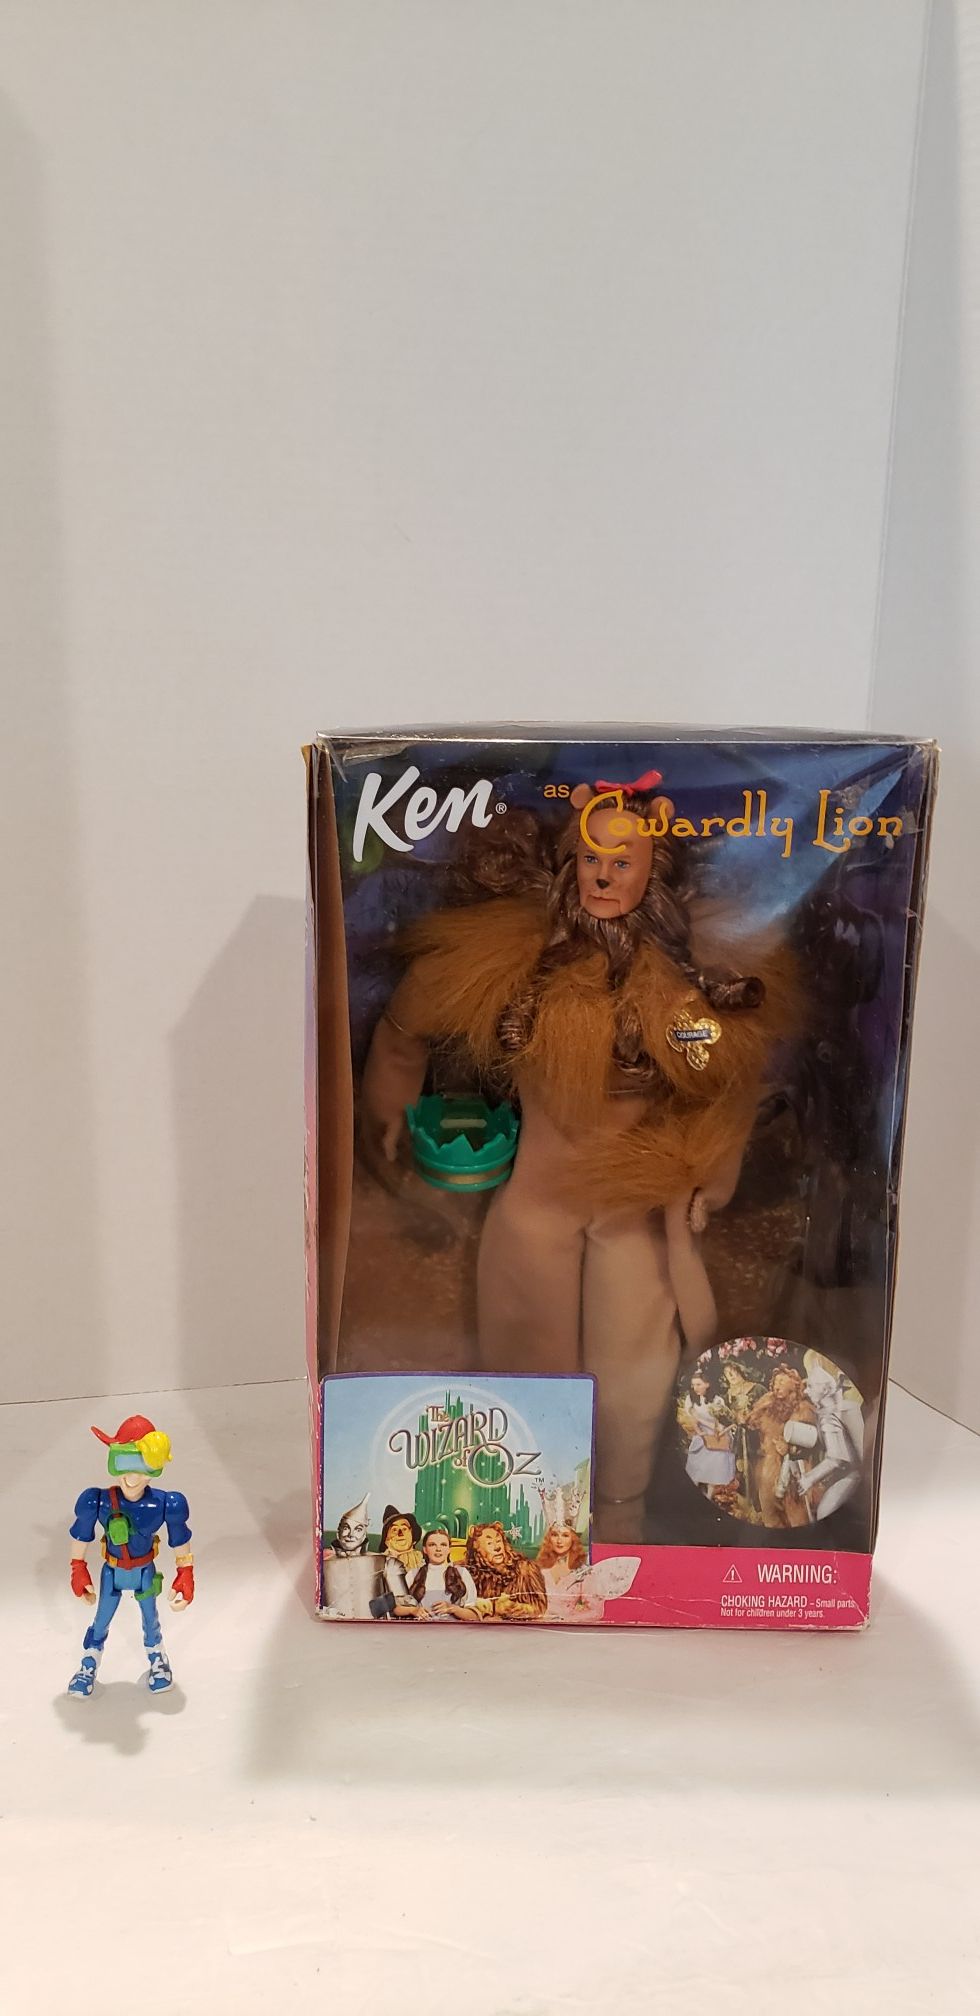 1999 Barbie Wizard of Oz Ken Cowardly Lion